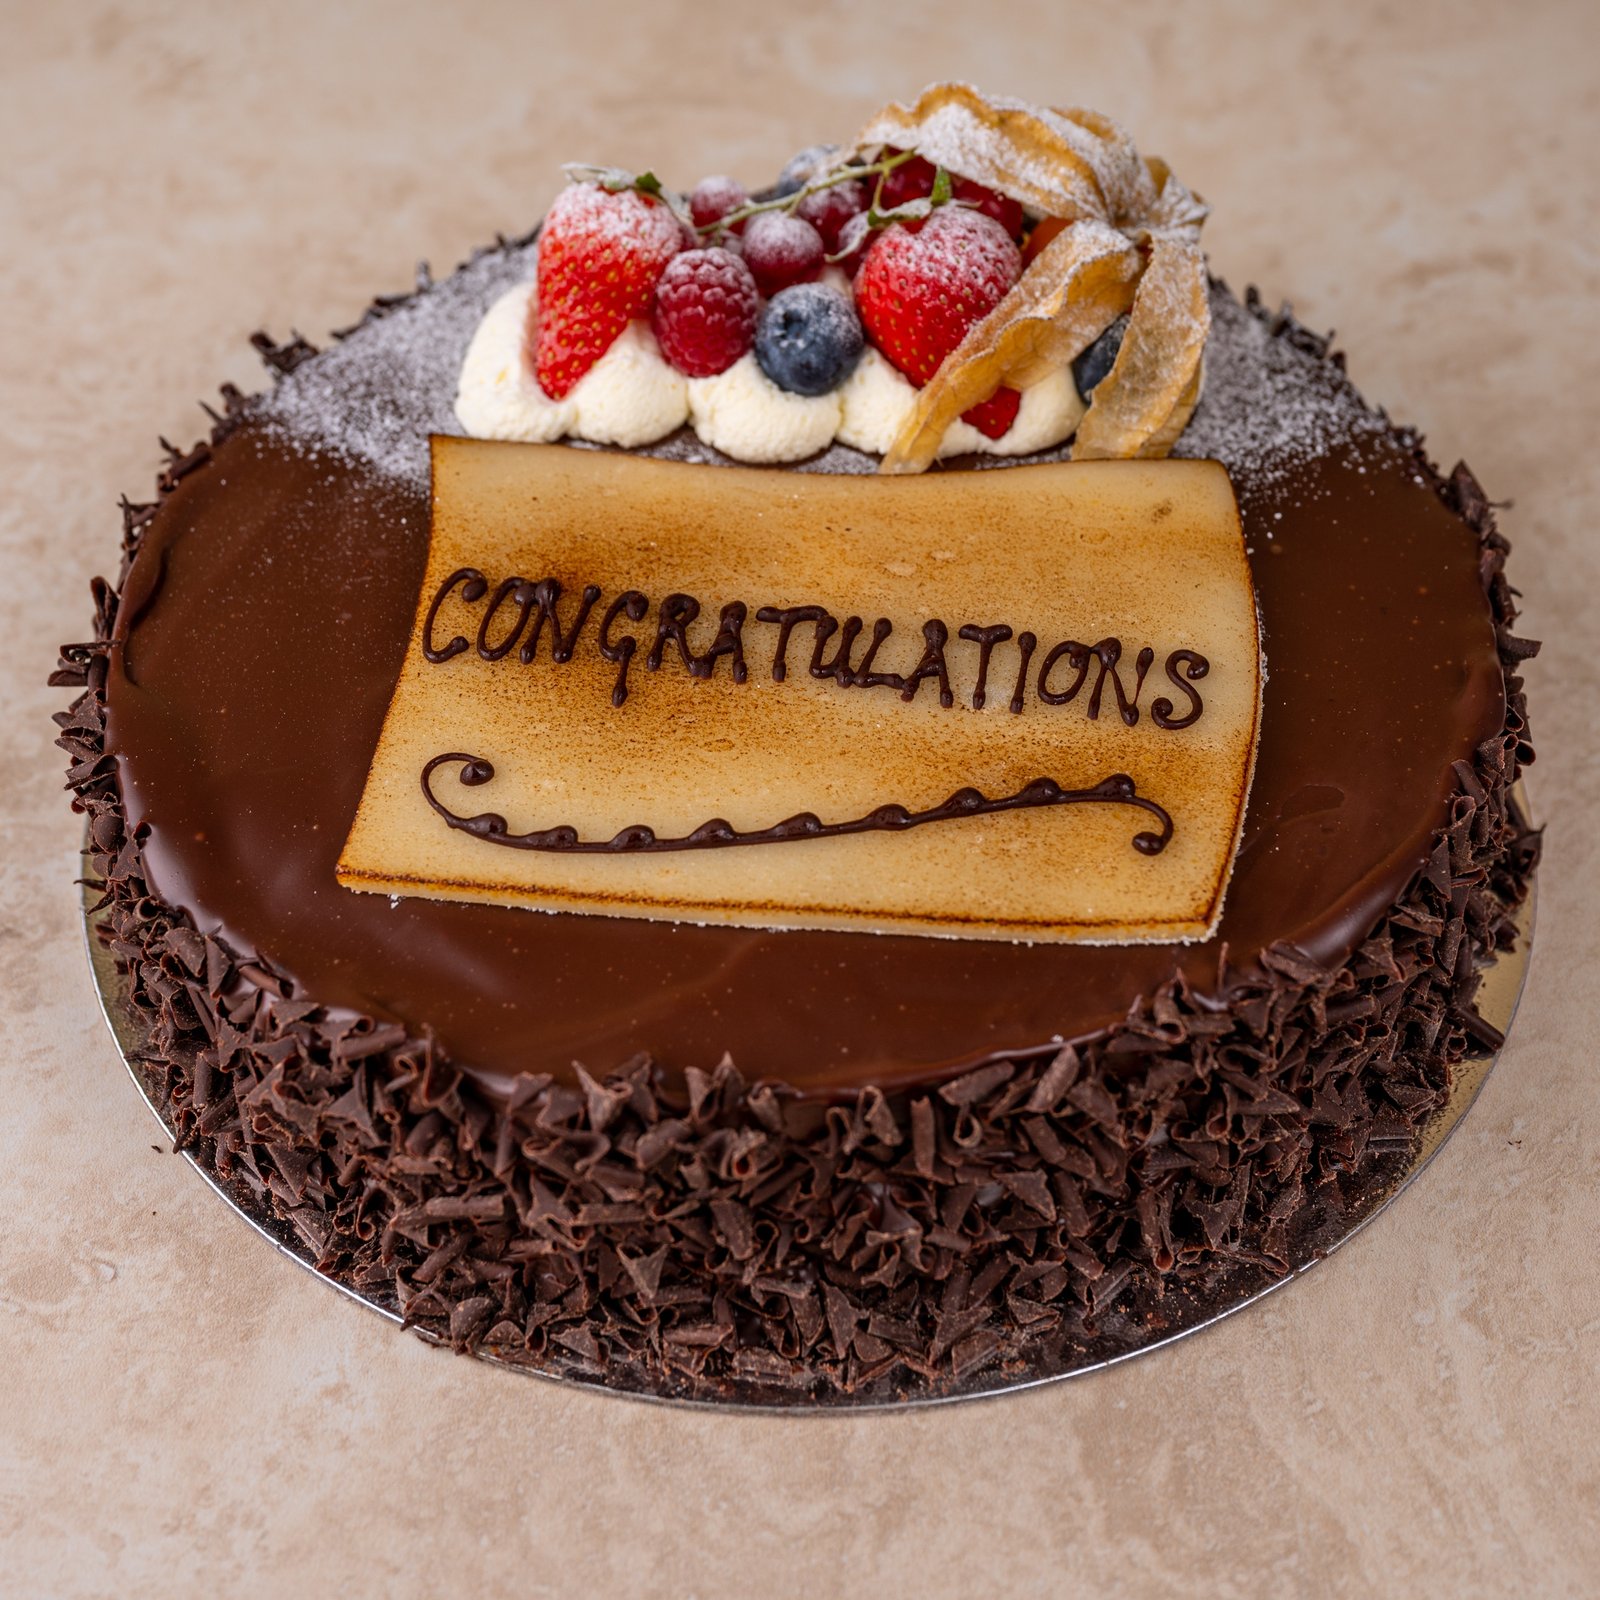 Top 10 congratulations cake - Online Birthday Cakes - Quora